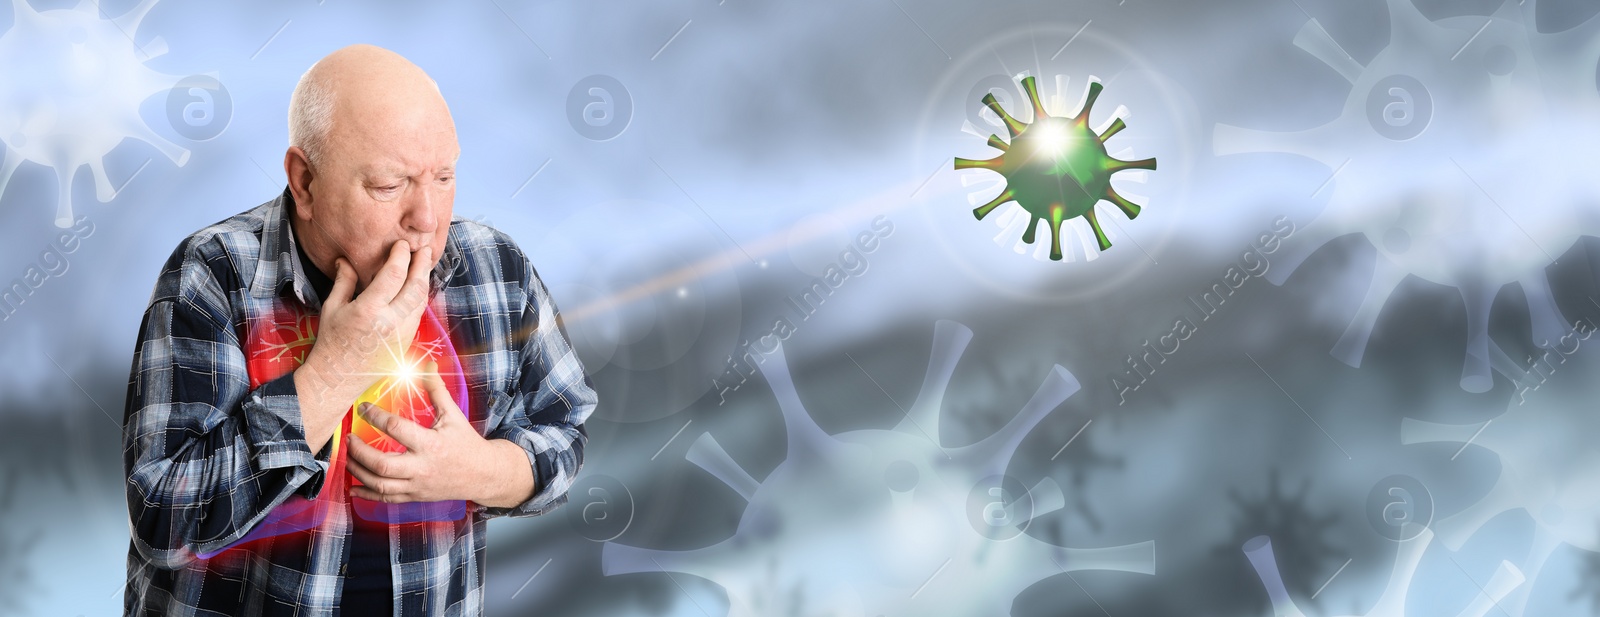 Image of Respiratory virus affecting senior man on blurred background